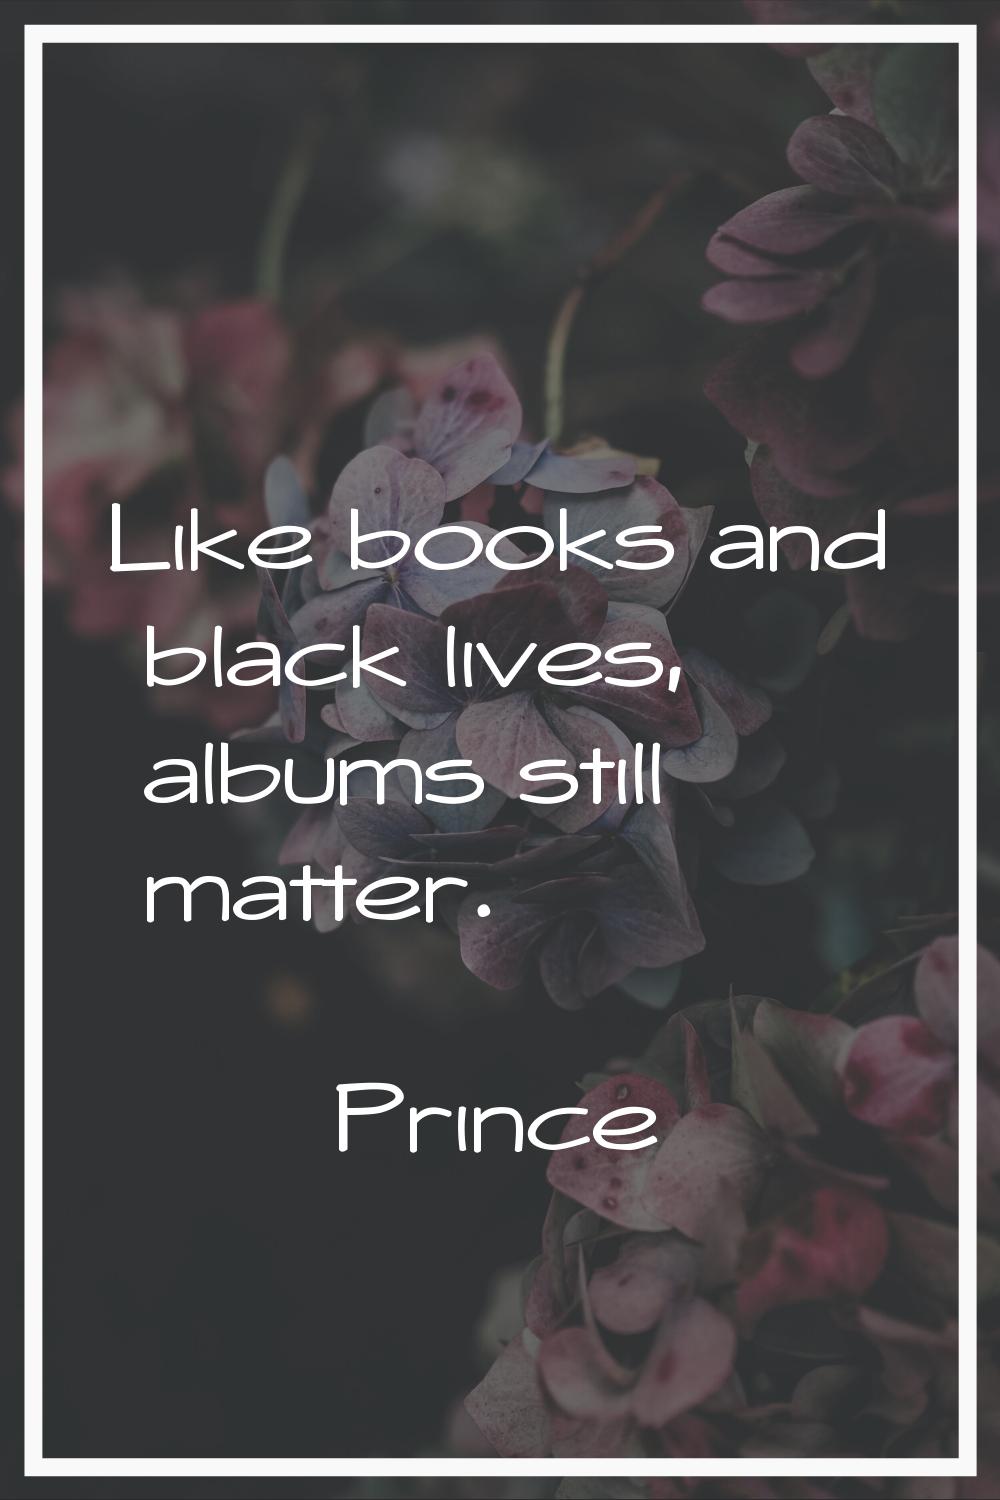 Like books and black lives, albums still matter.